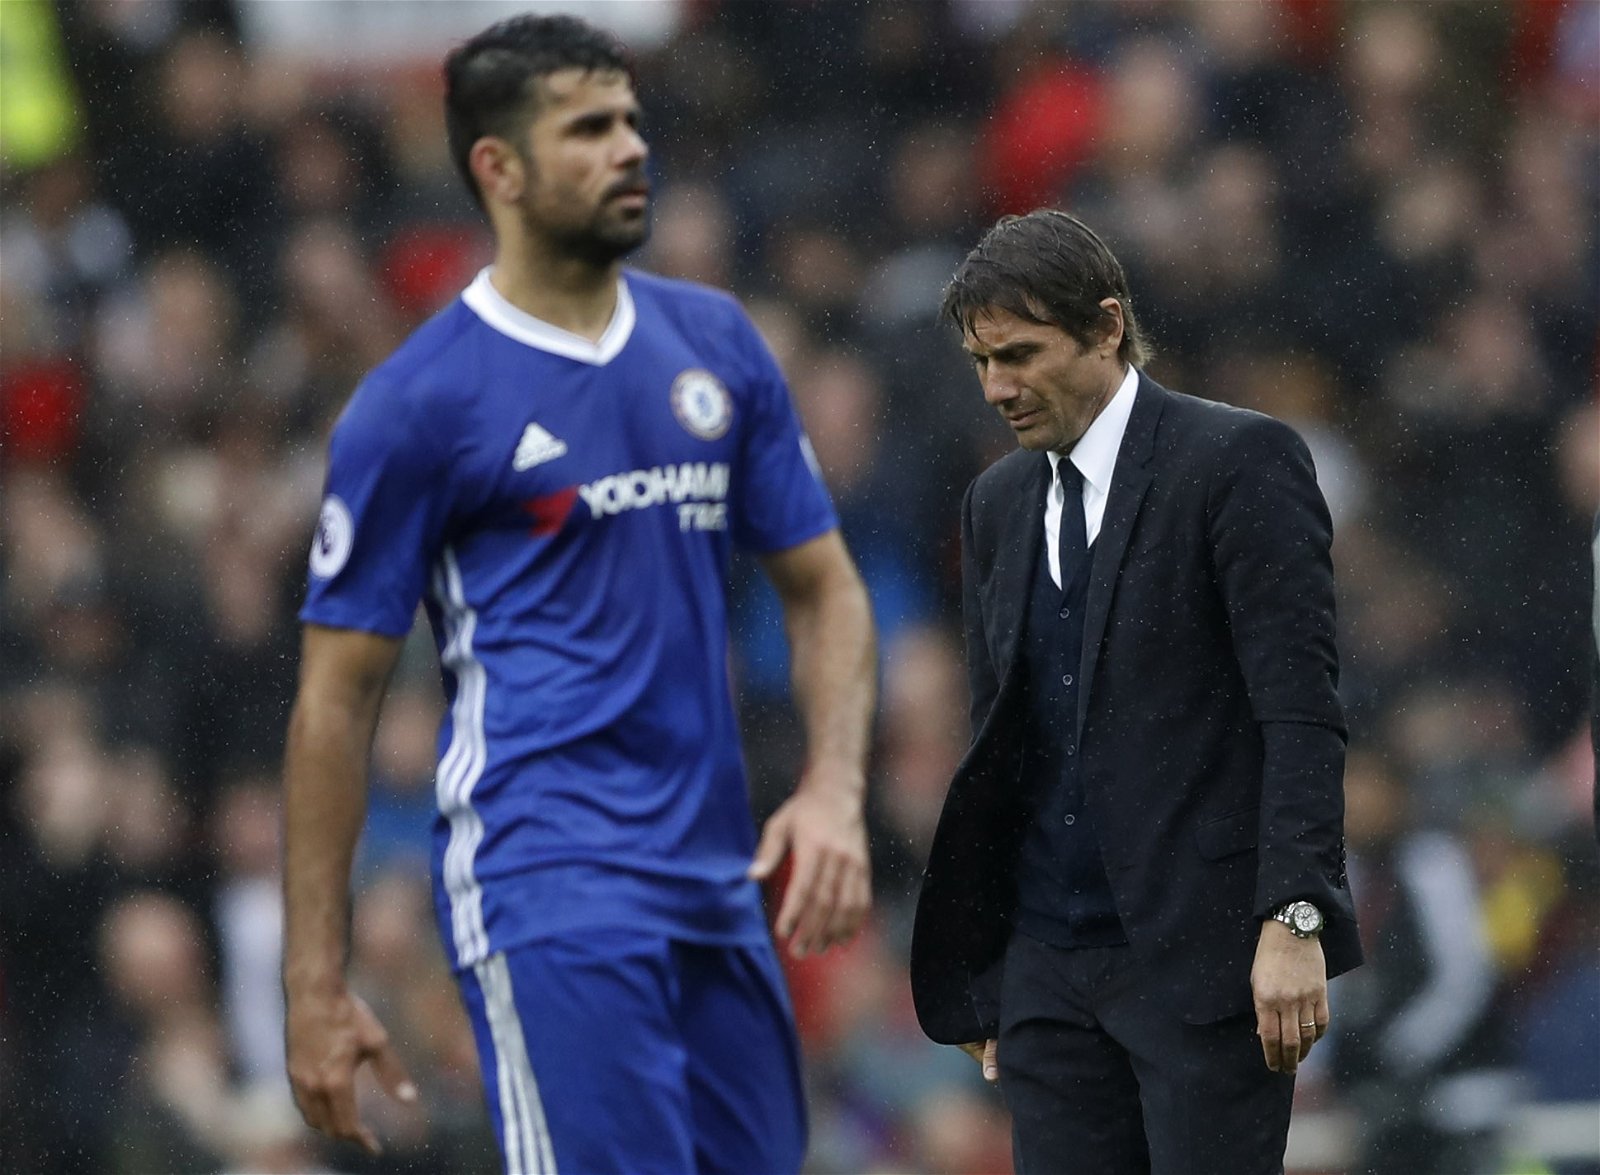 Chelsea To Pay Around £100m Antonio Conte's Infamous Text To Diego Costa